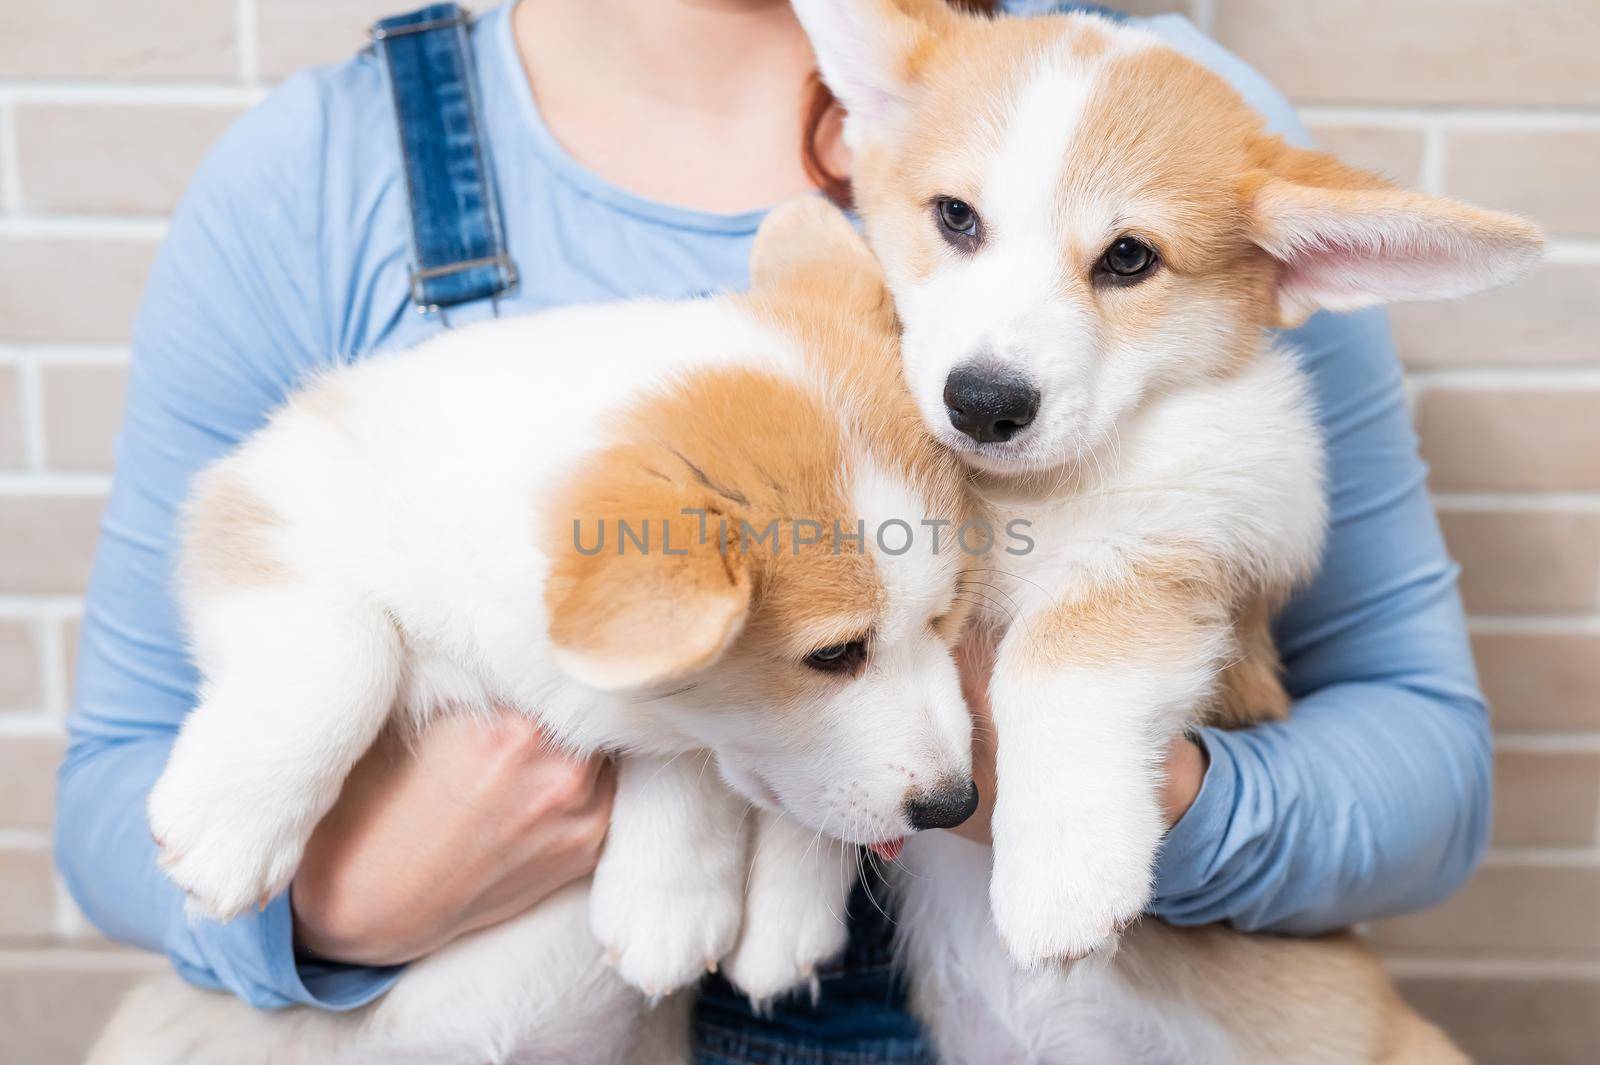 Caucasian woman holding two cute pembroke corgi puppies. by mrwed54